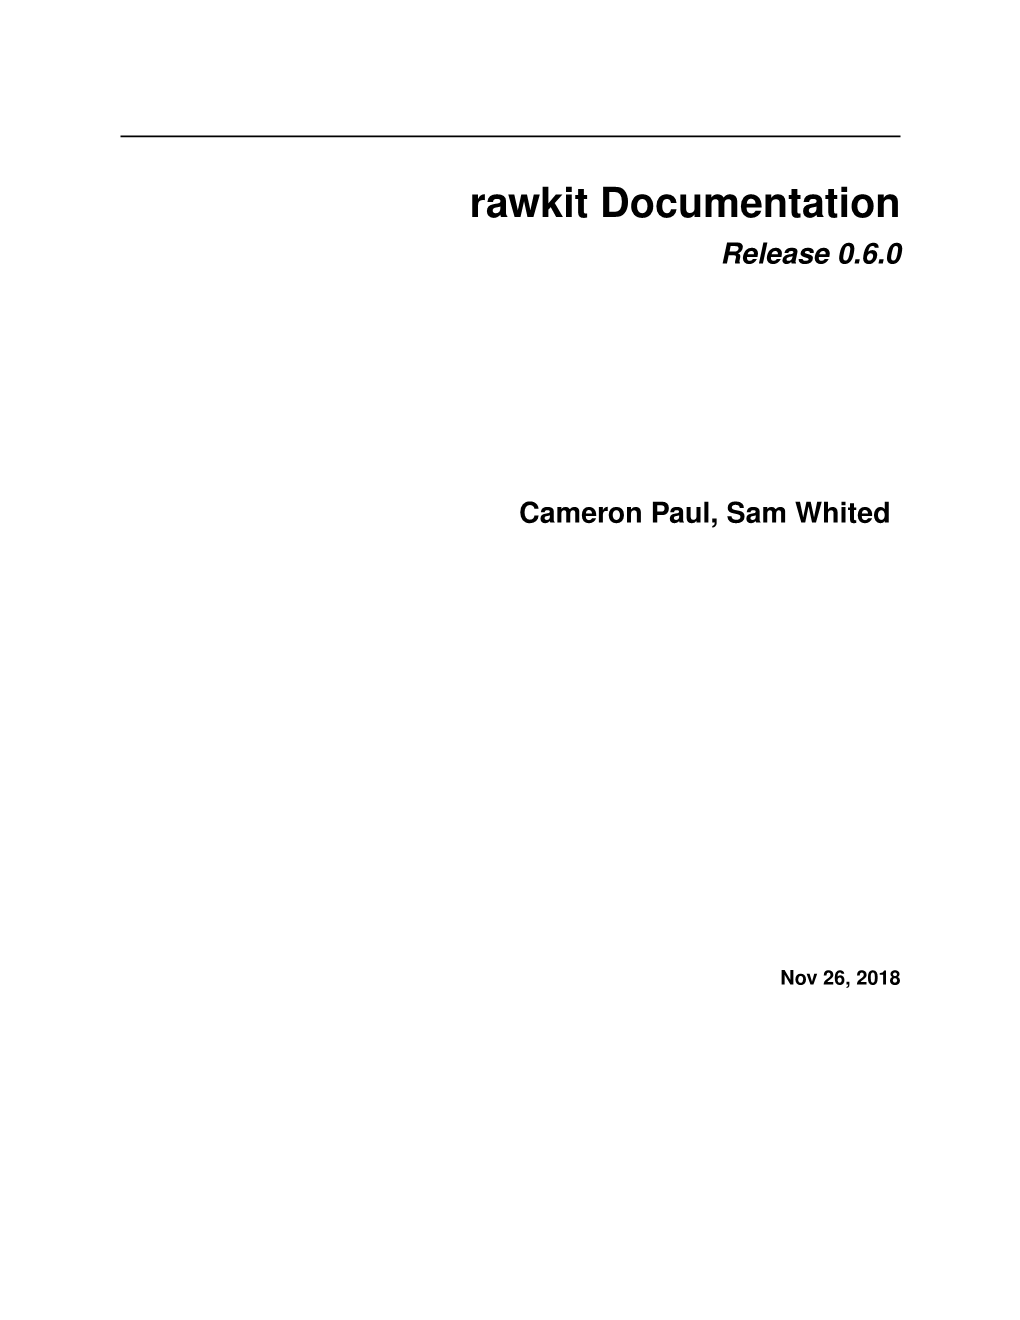 Rawkit Documentation Release 0.6.0